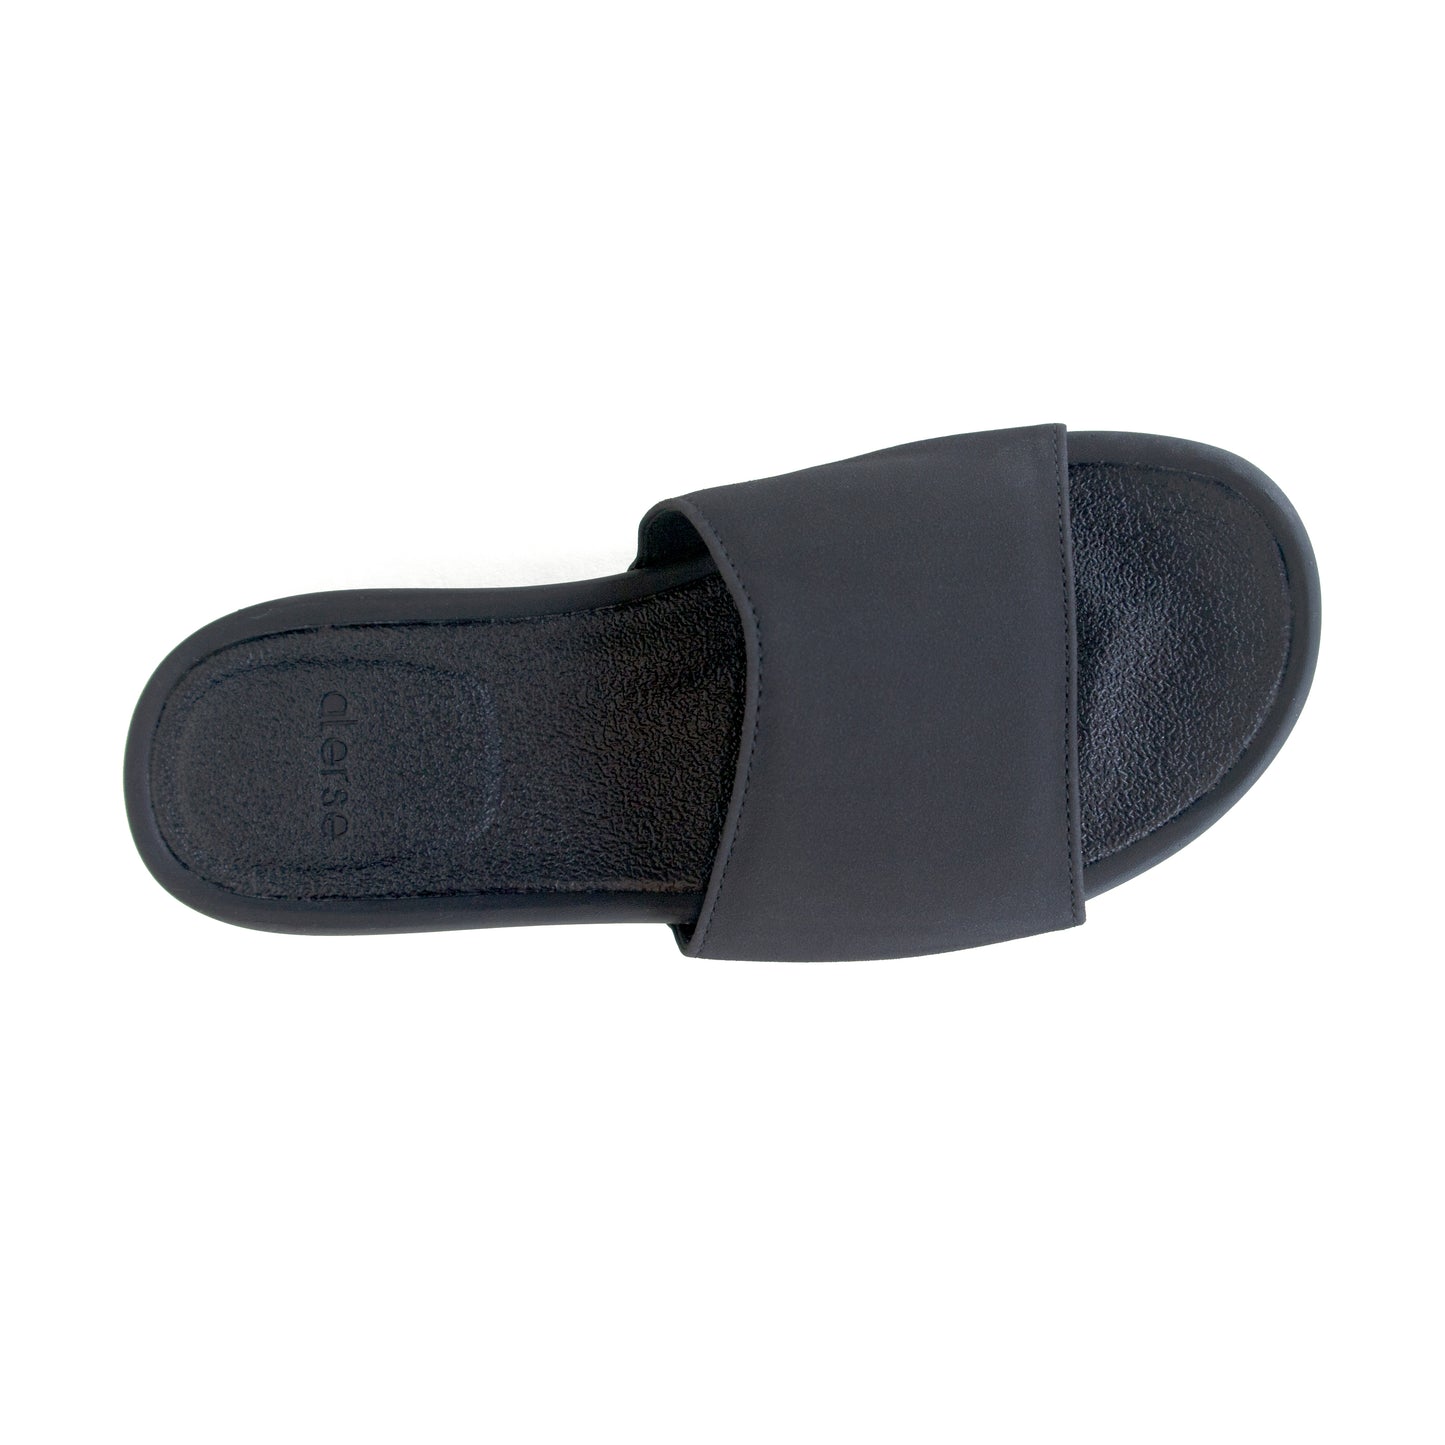 Sandals Made of Yoga Mat - Alerse